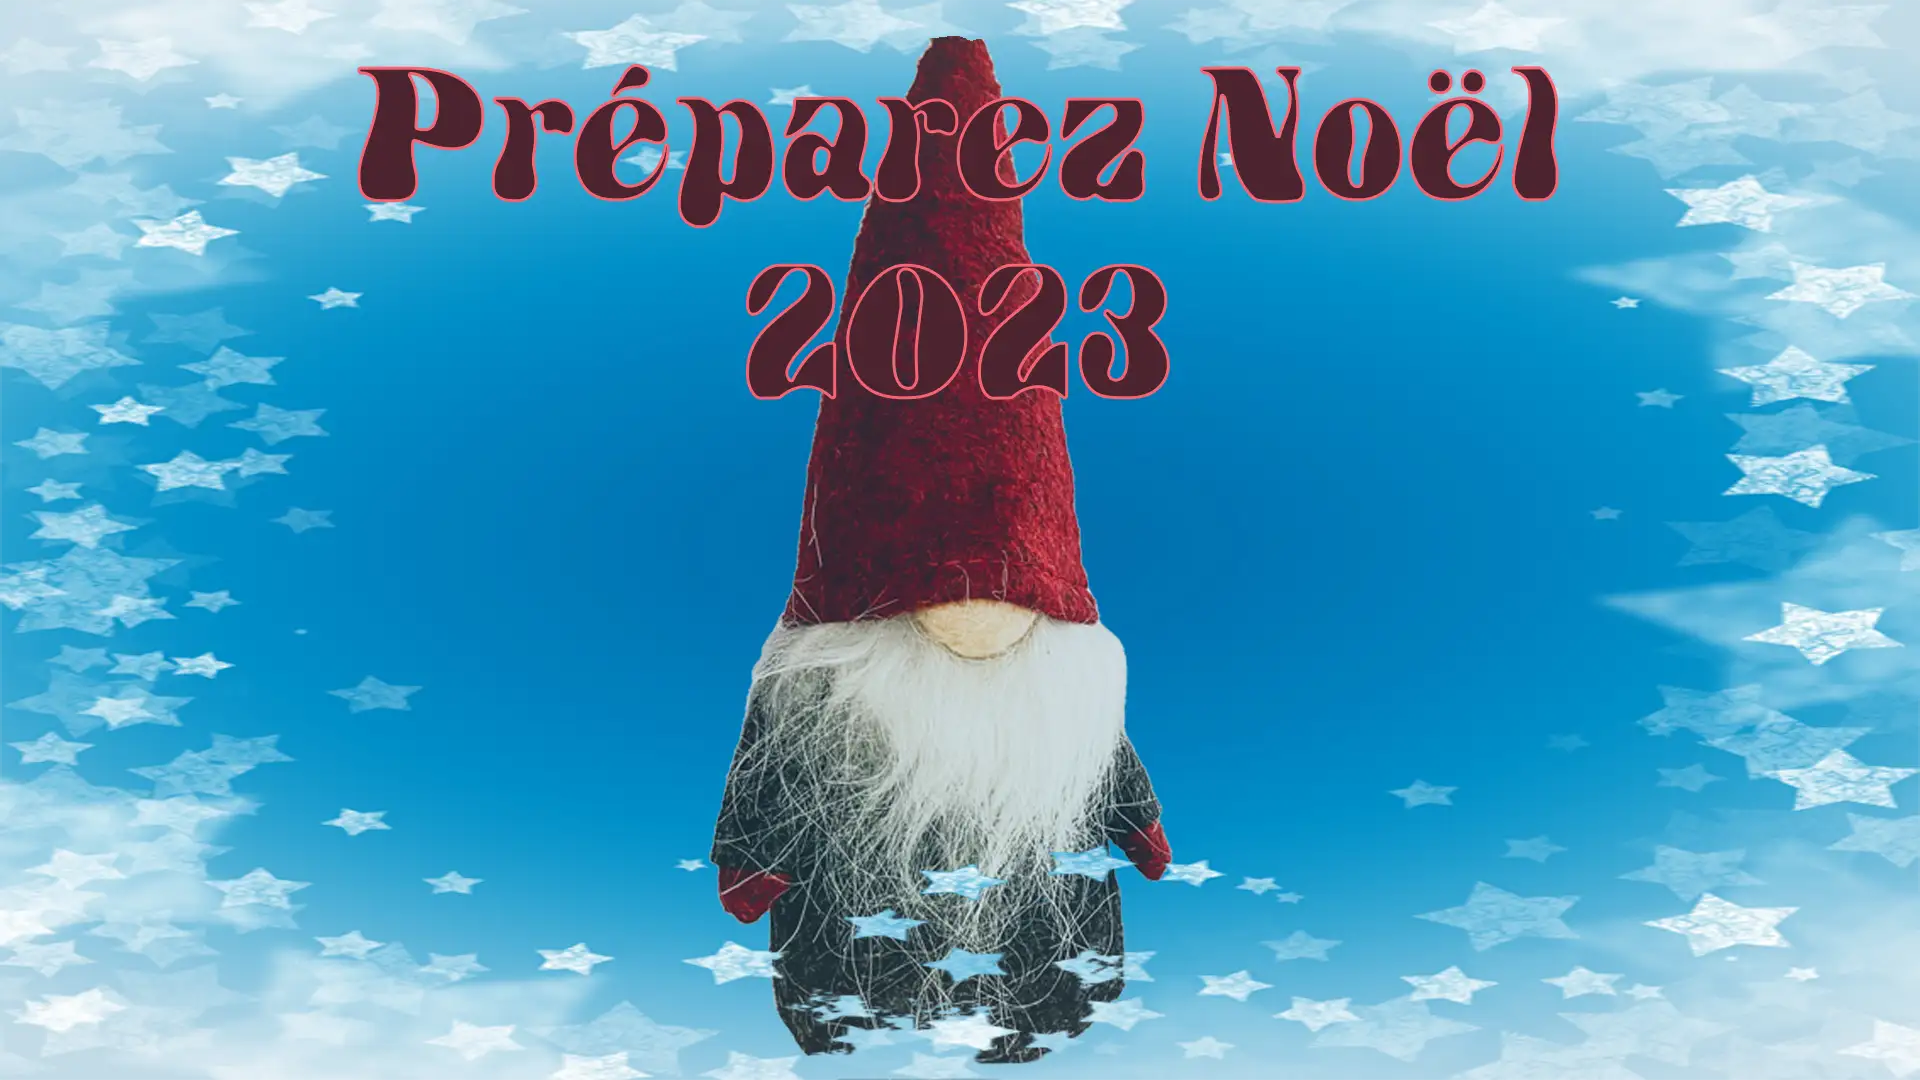 Claude gerard production présente Animation de Noel 2023